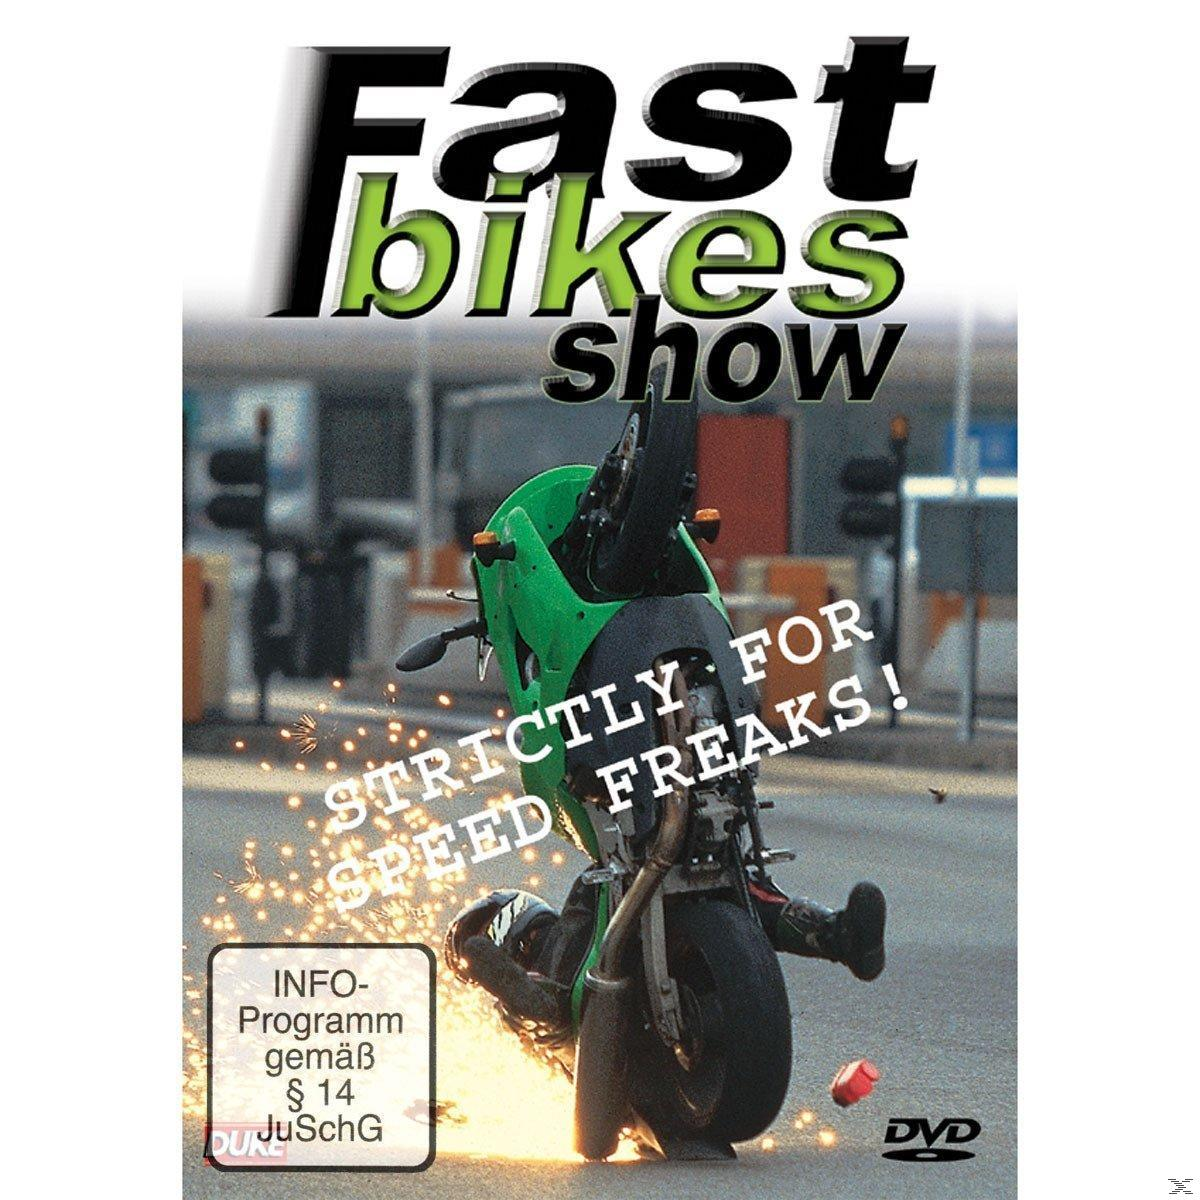 Bikes DVD Fast Show 1